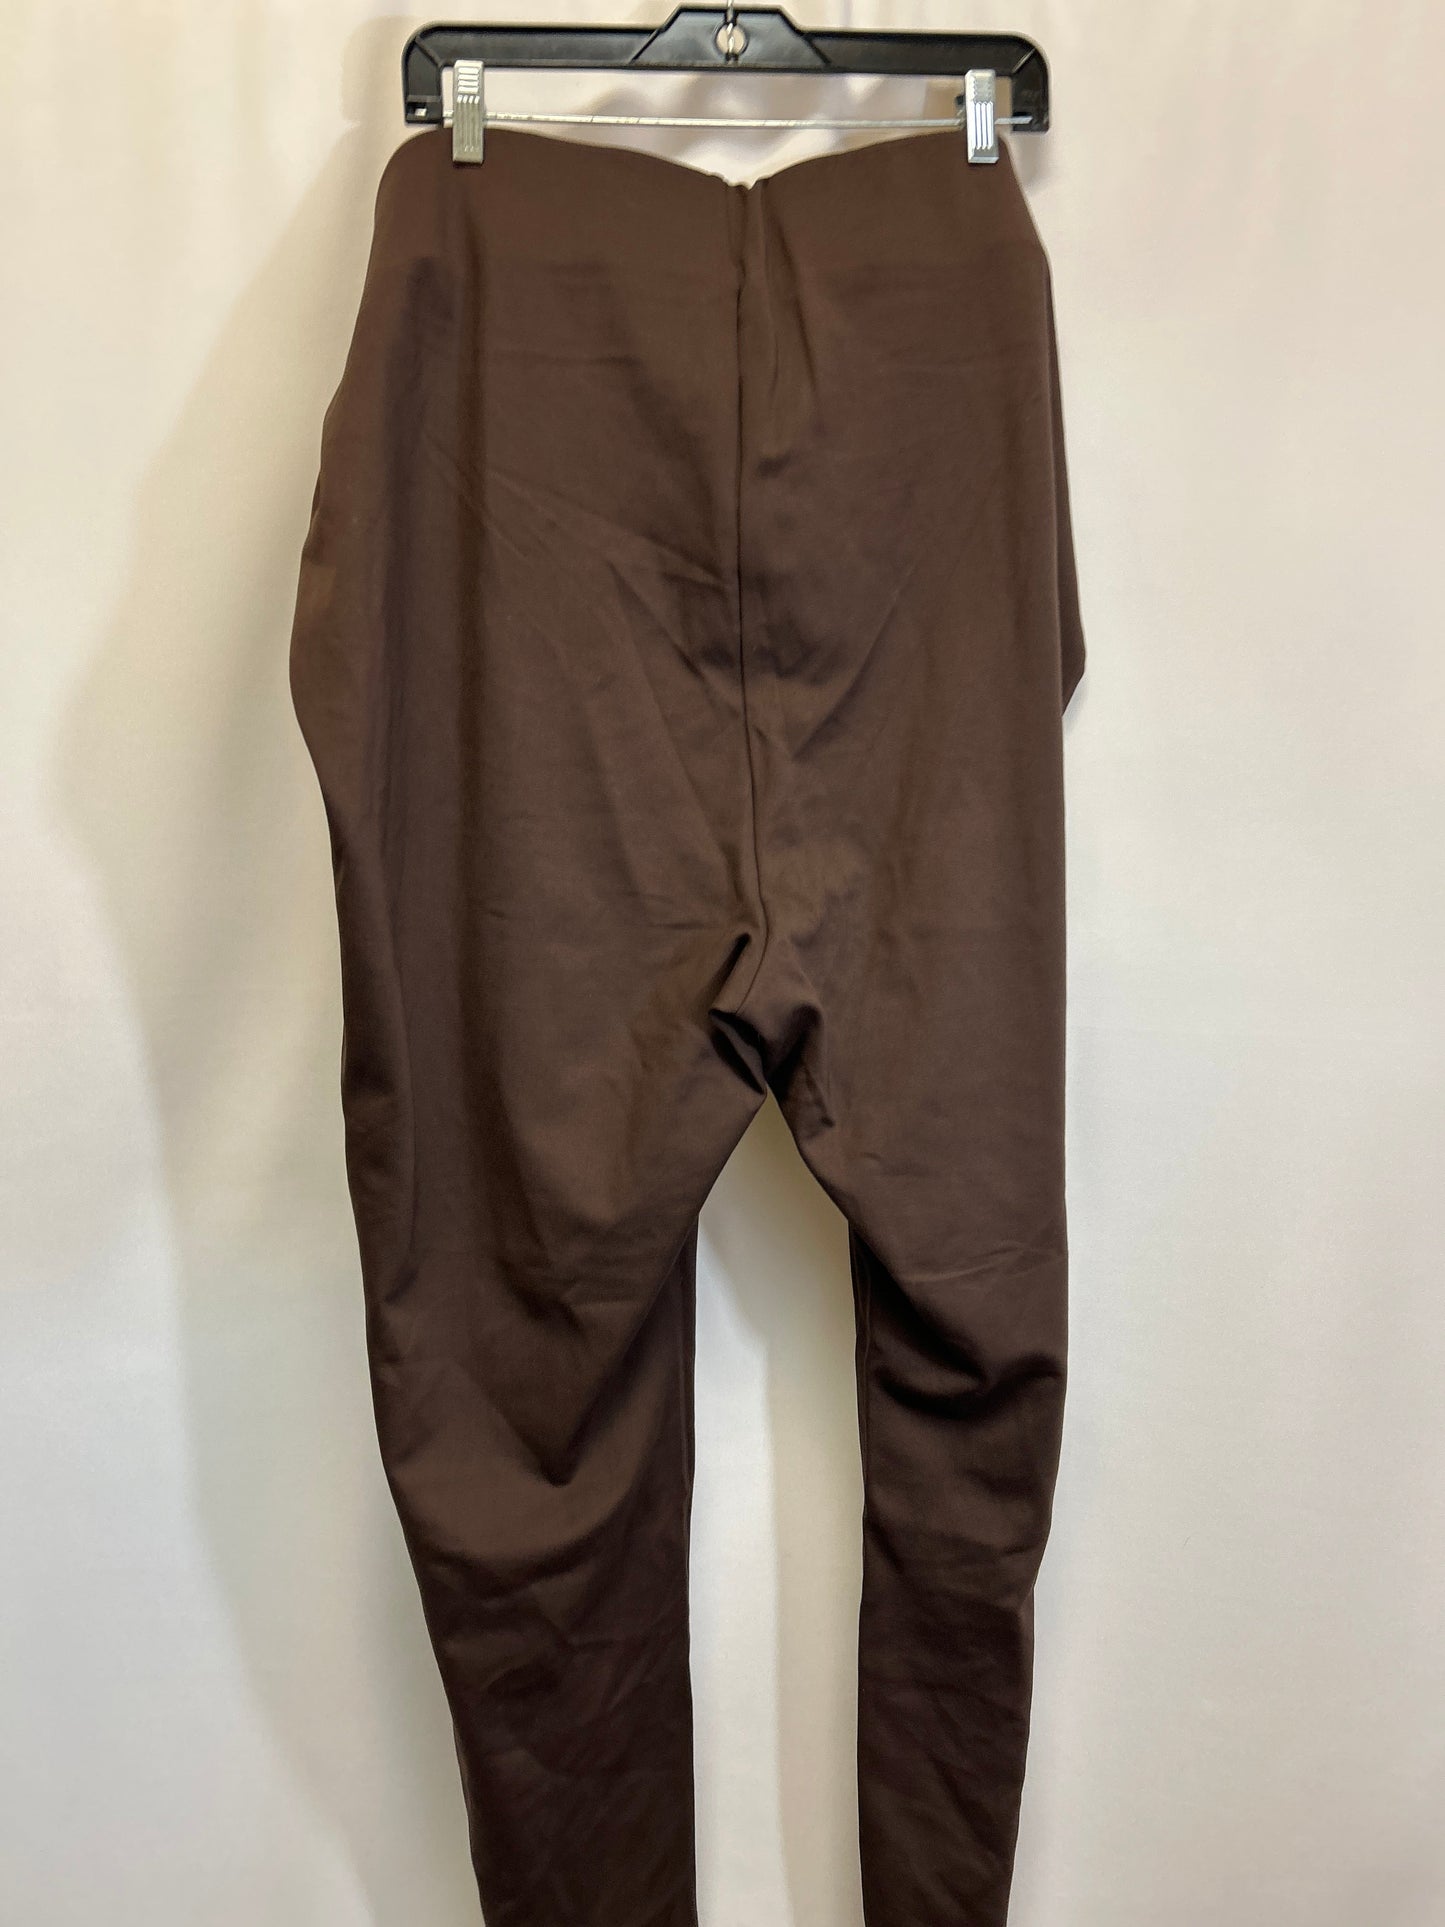 Pants Dress By Old Navy  Size: 4x